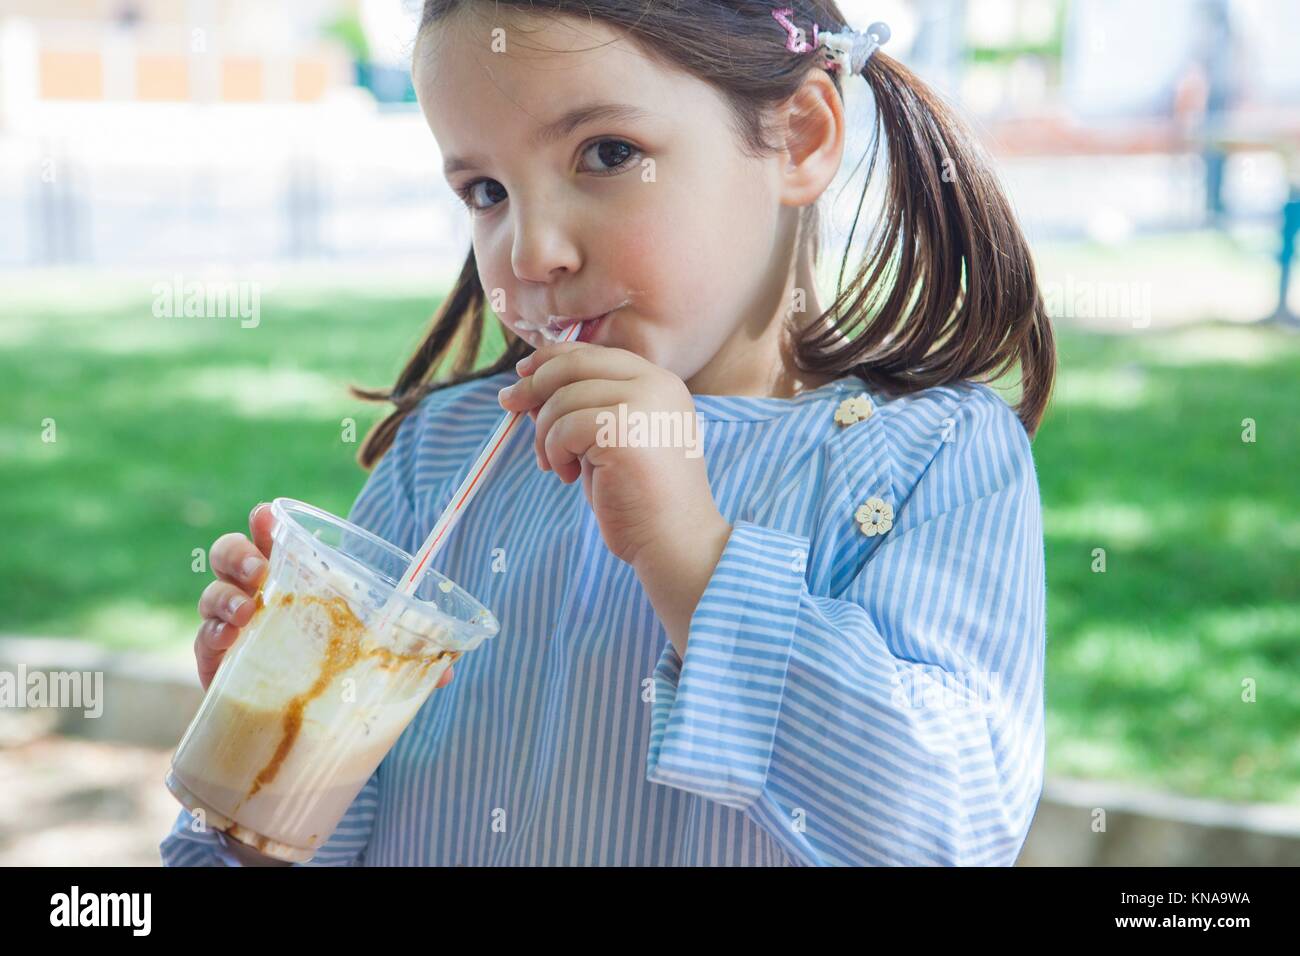 Little girl drinking milkshake at park. She is 5 years old. Stock Photo